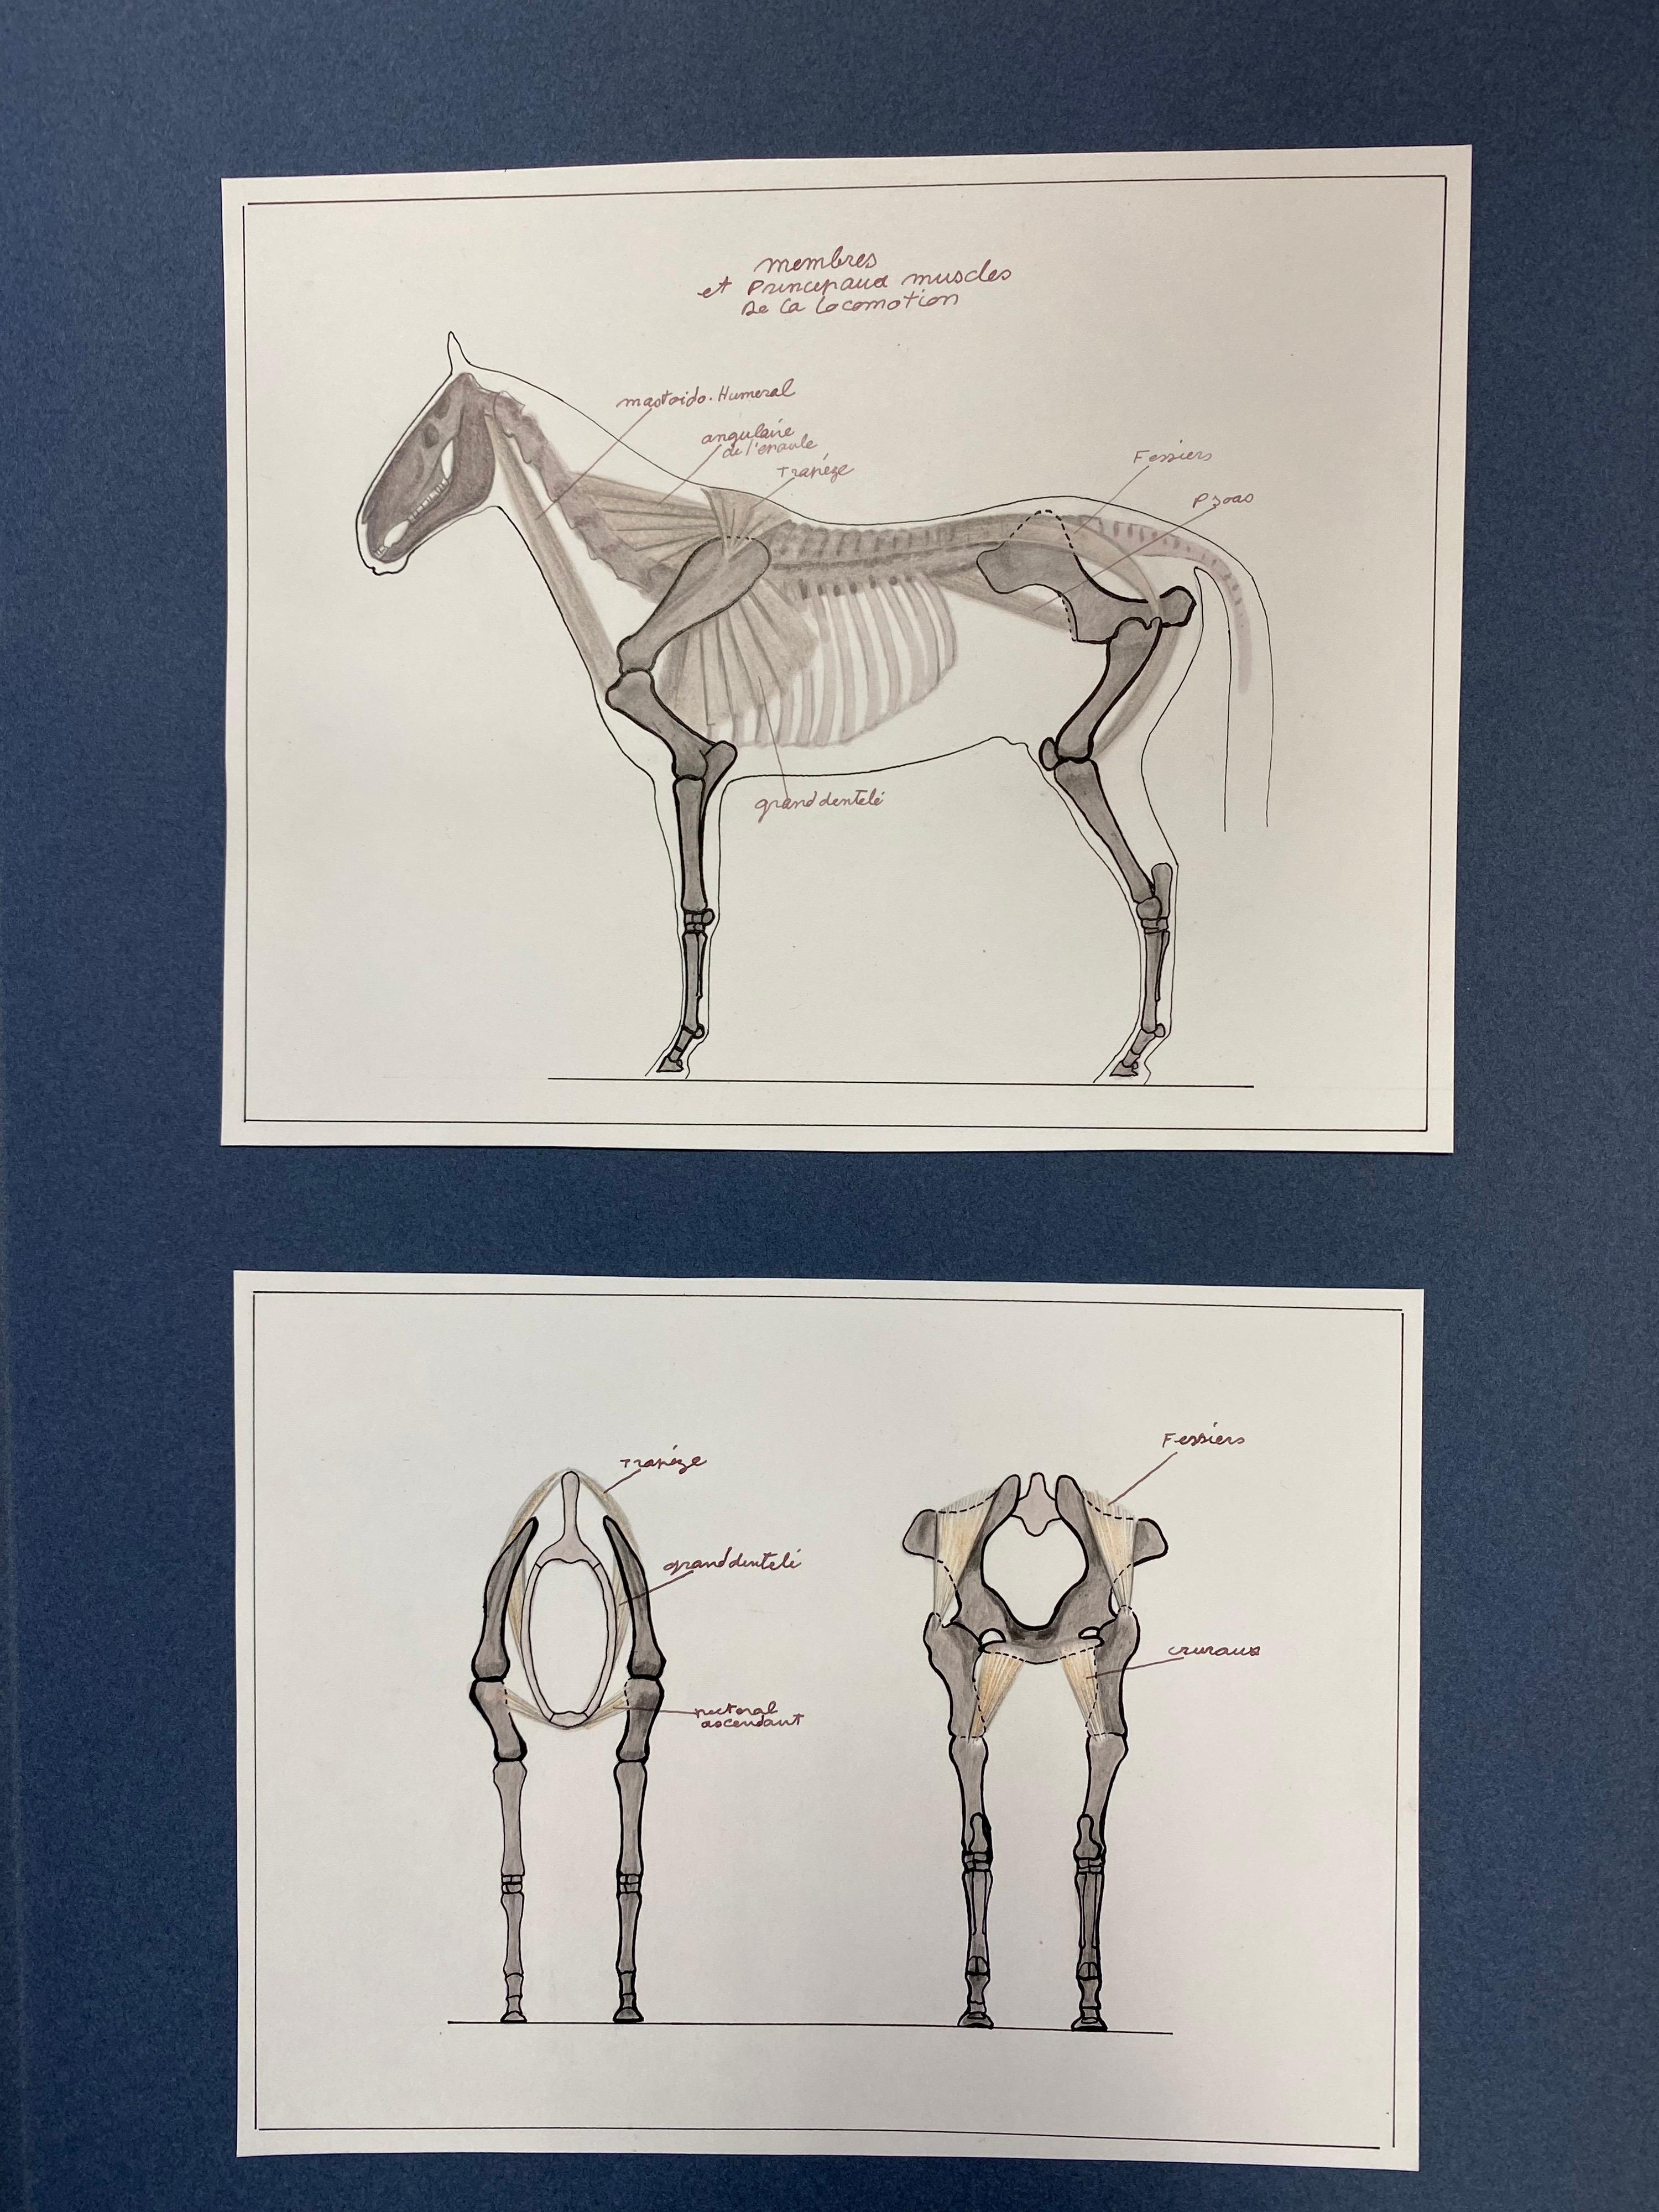 Robert Ladou Animal Art - Anatomy Drawings of a Horse - Original French Artwork Equestrian Anatomy Study